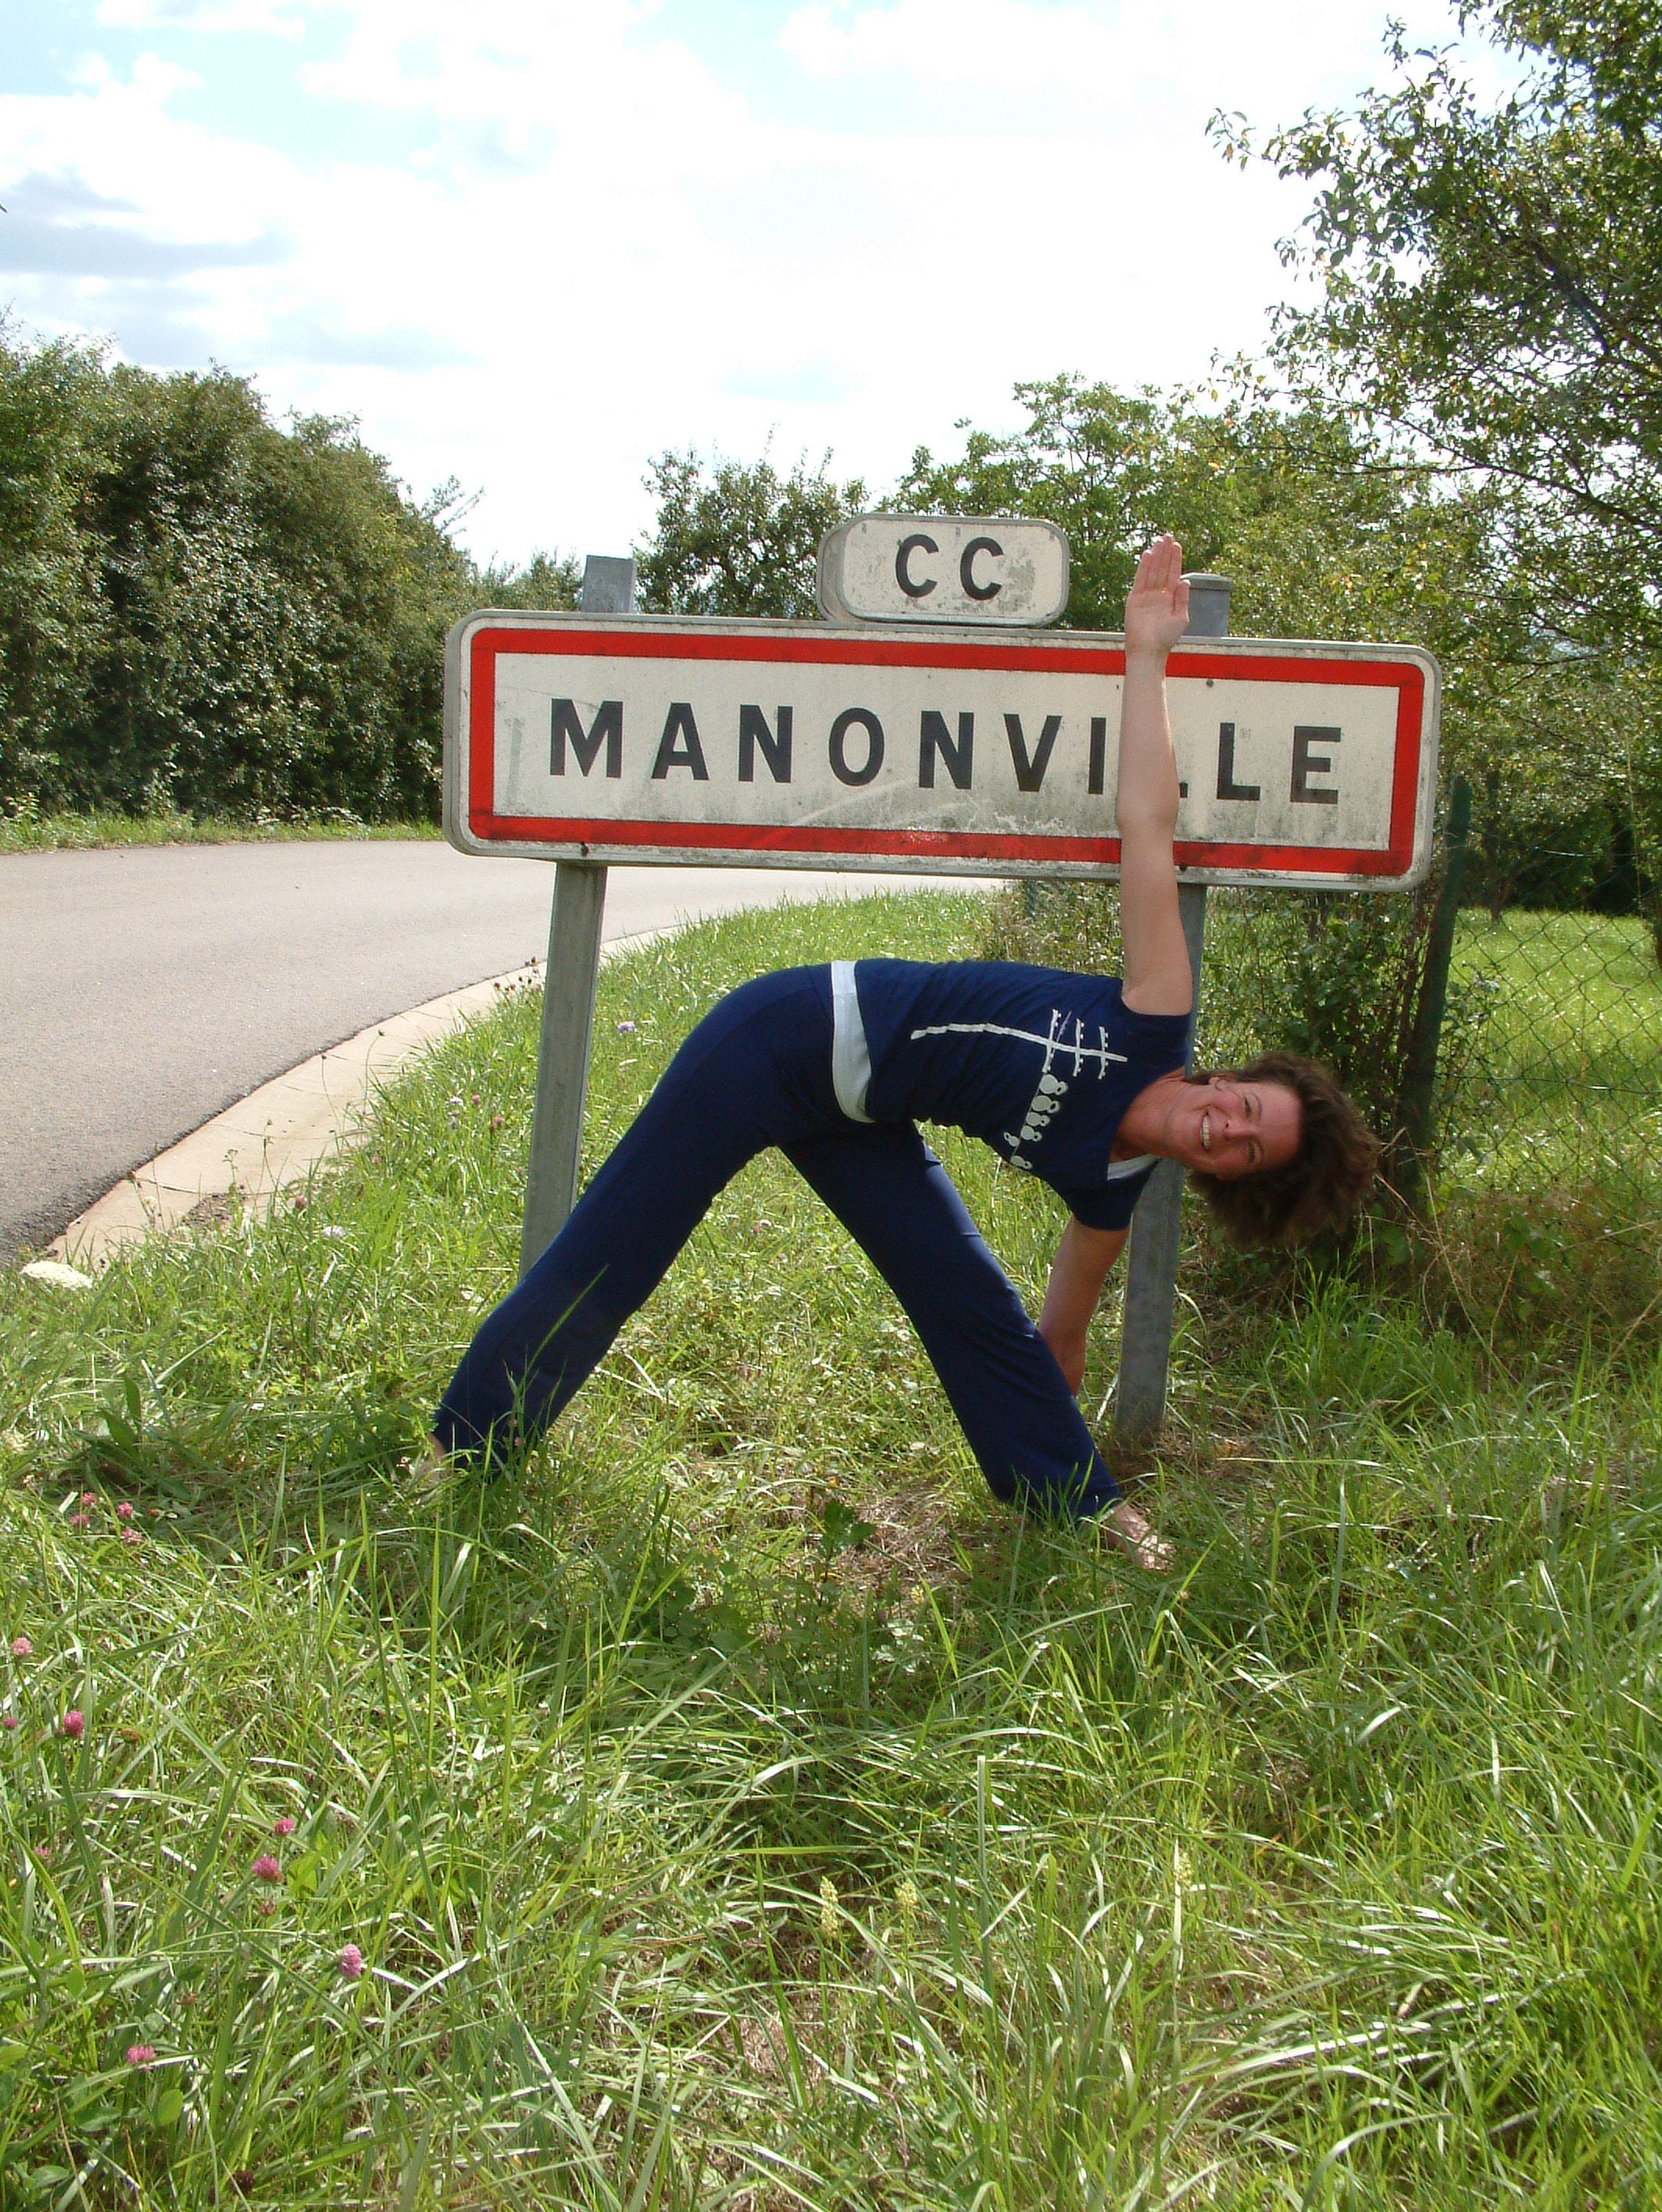 Over Manon